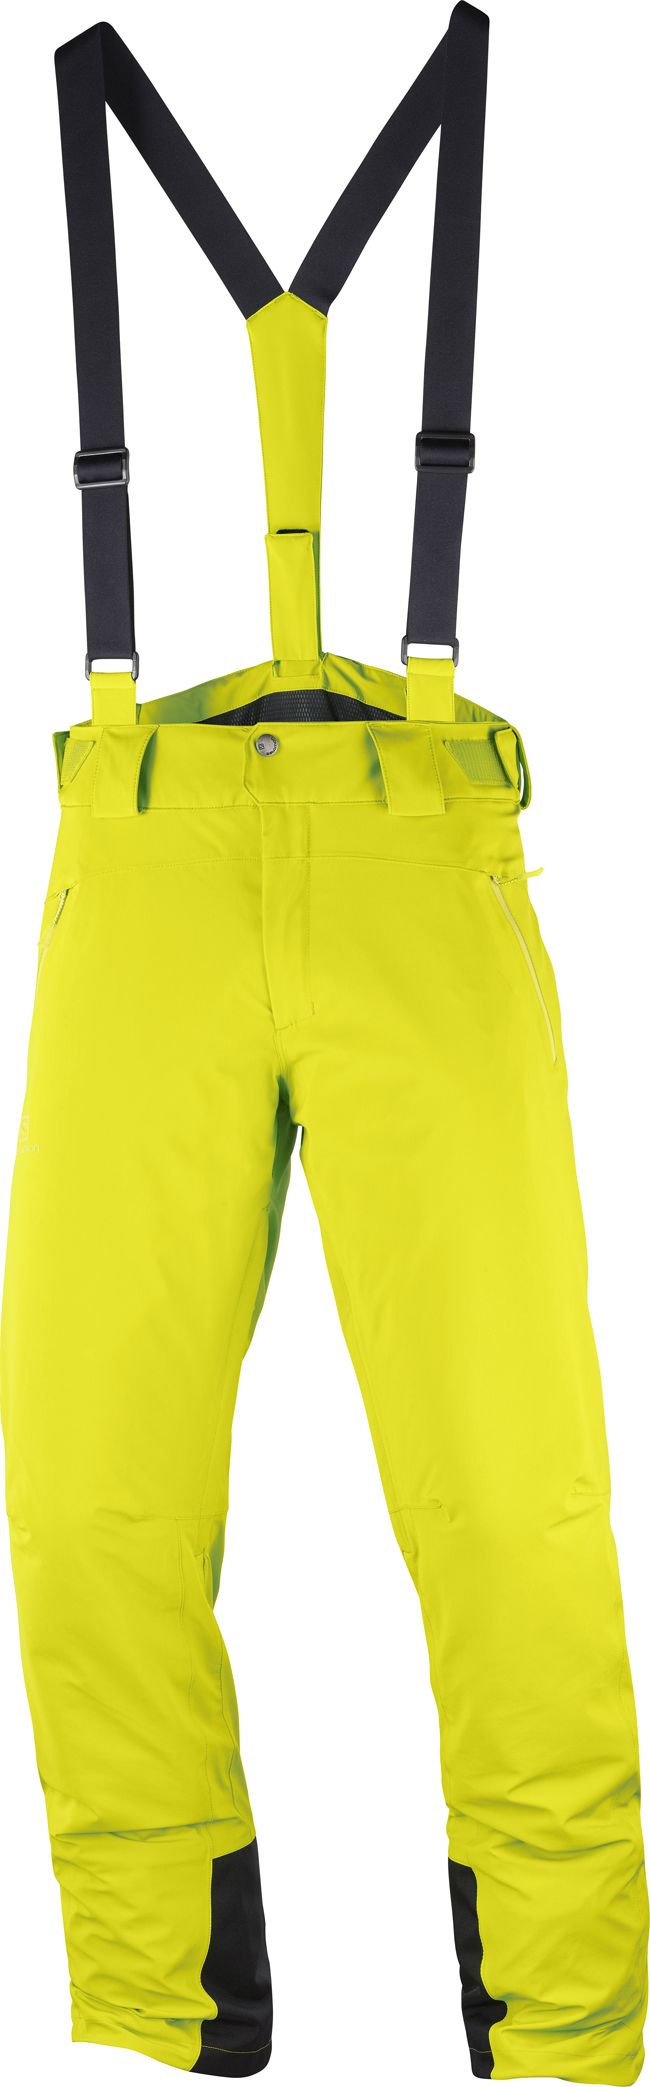 zuurstof alleen Vergelijkbaar Salomon Ski Trousers Ice Glory Pant Sulphur Pant | Landau Store